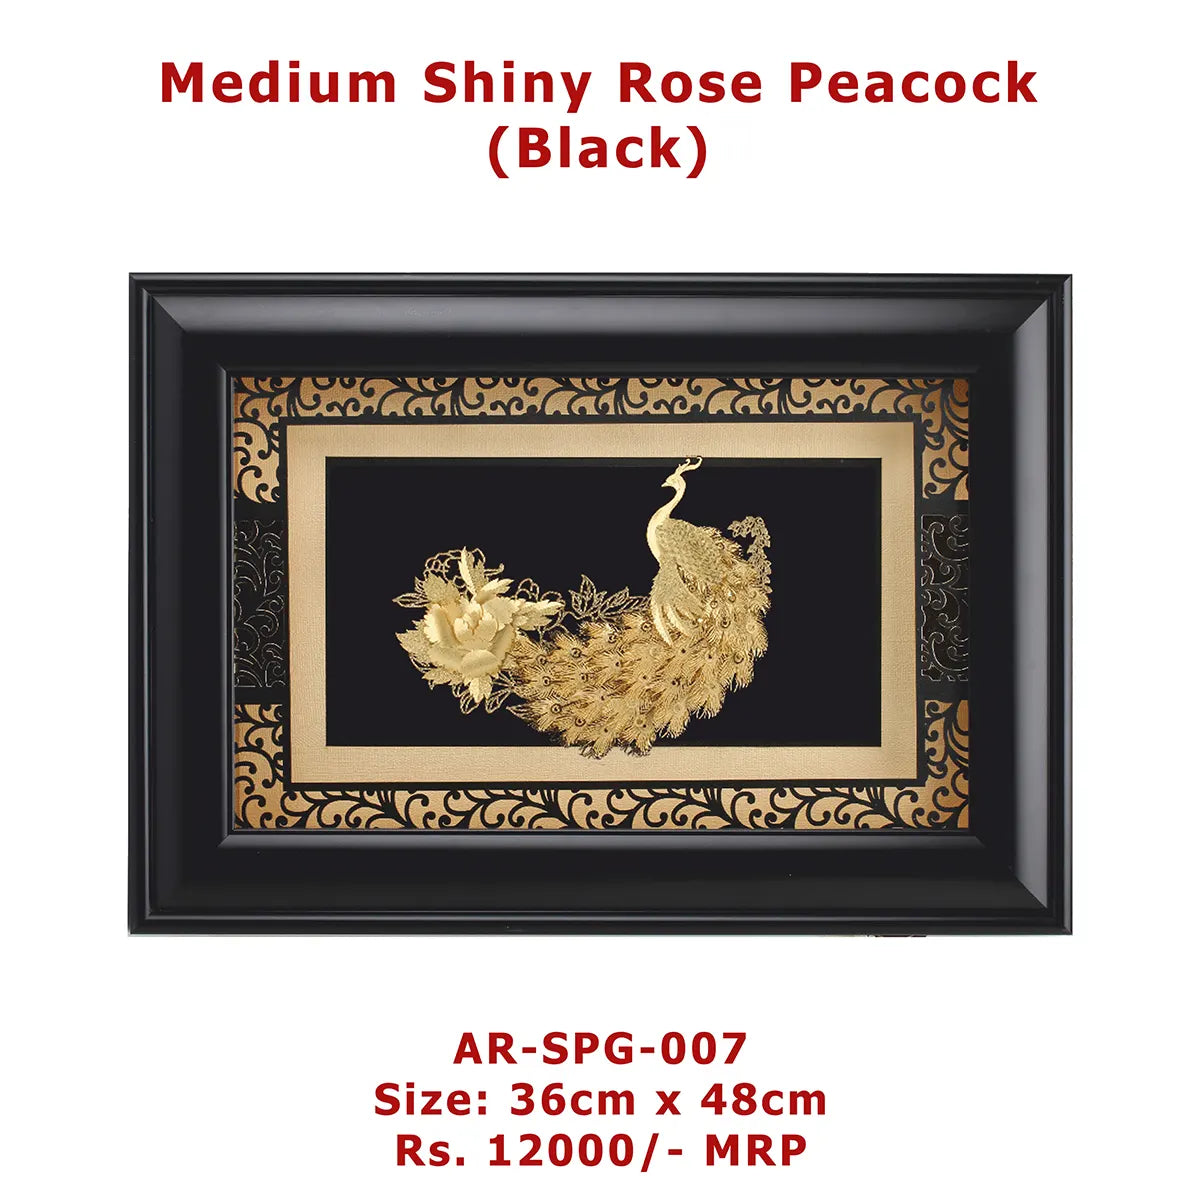 Medium Shiny Rose Peacock Black Frame